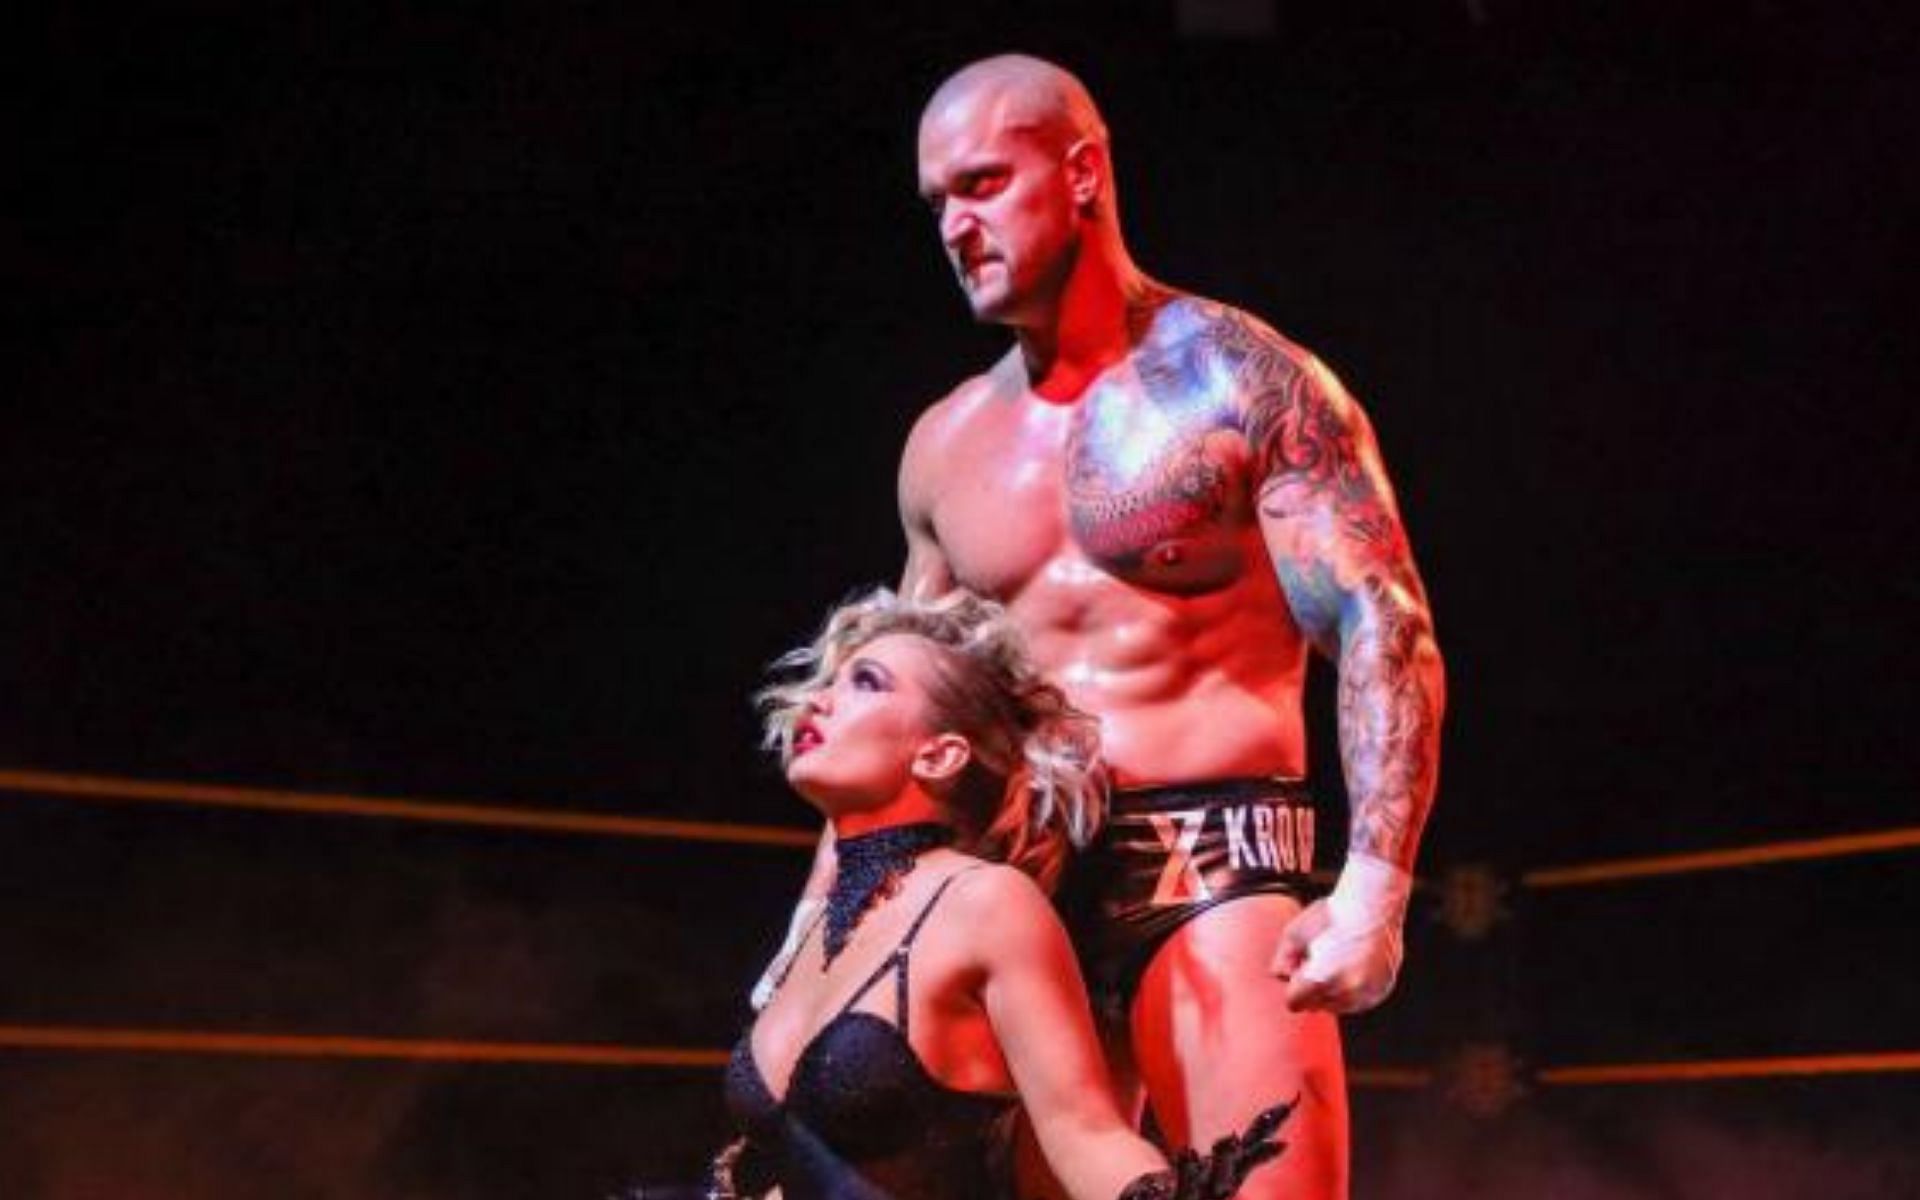 Scarlett Bordeaux managed her husband, Killer Kross, on NXT.